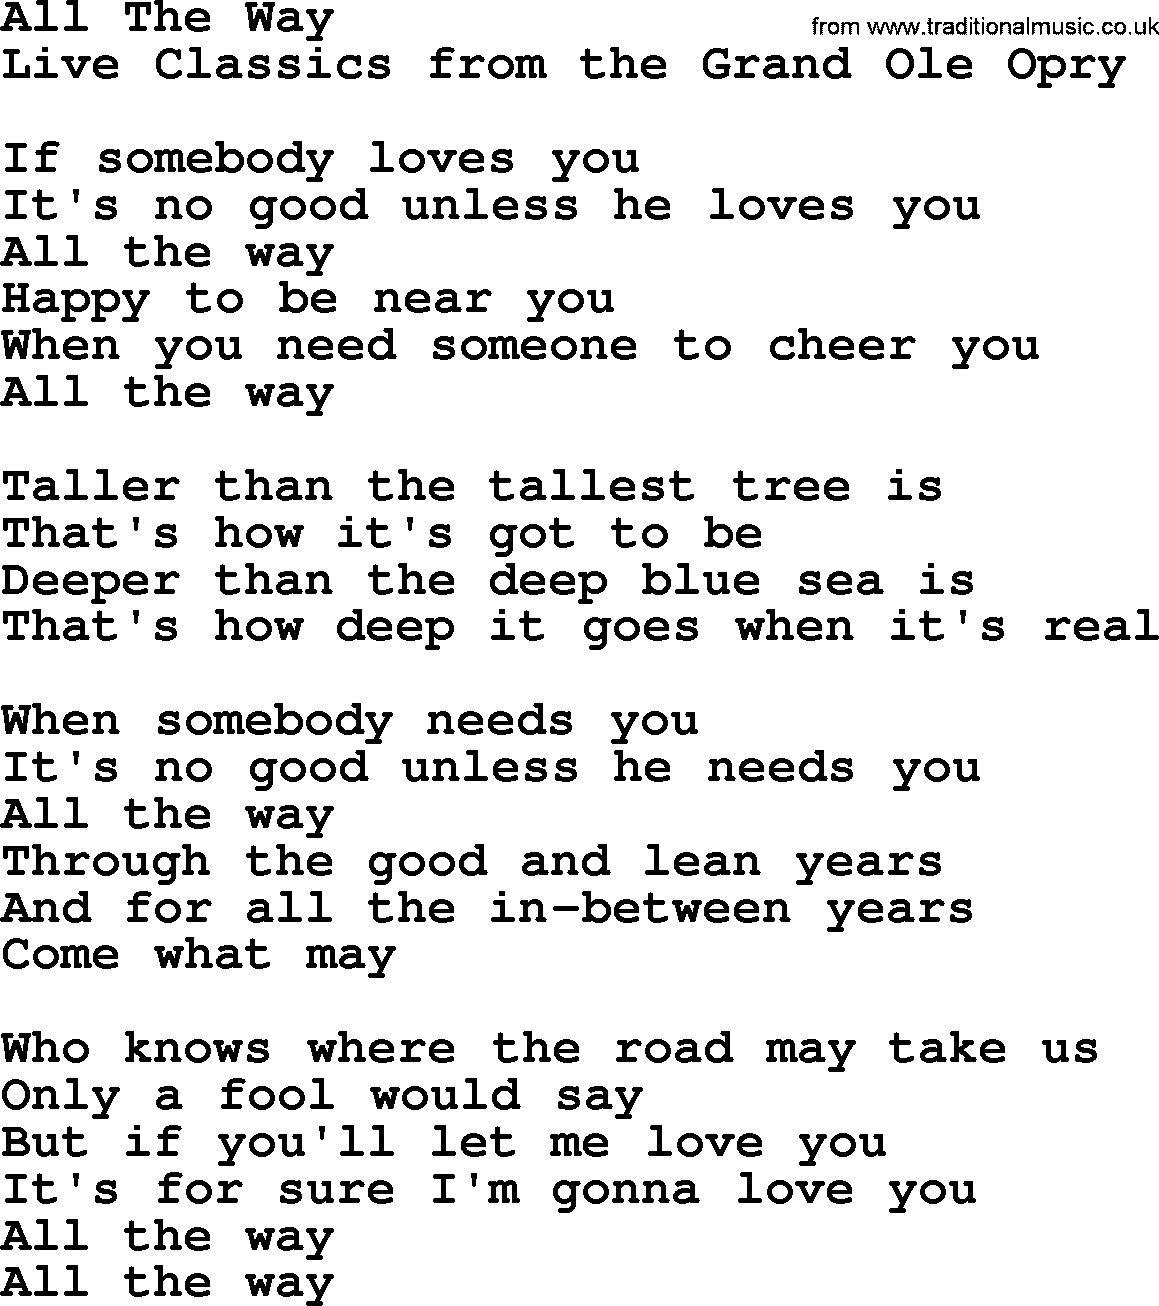 Marty Robbins song: All The Way, lyrics